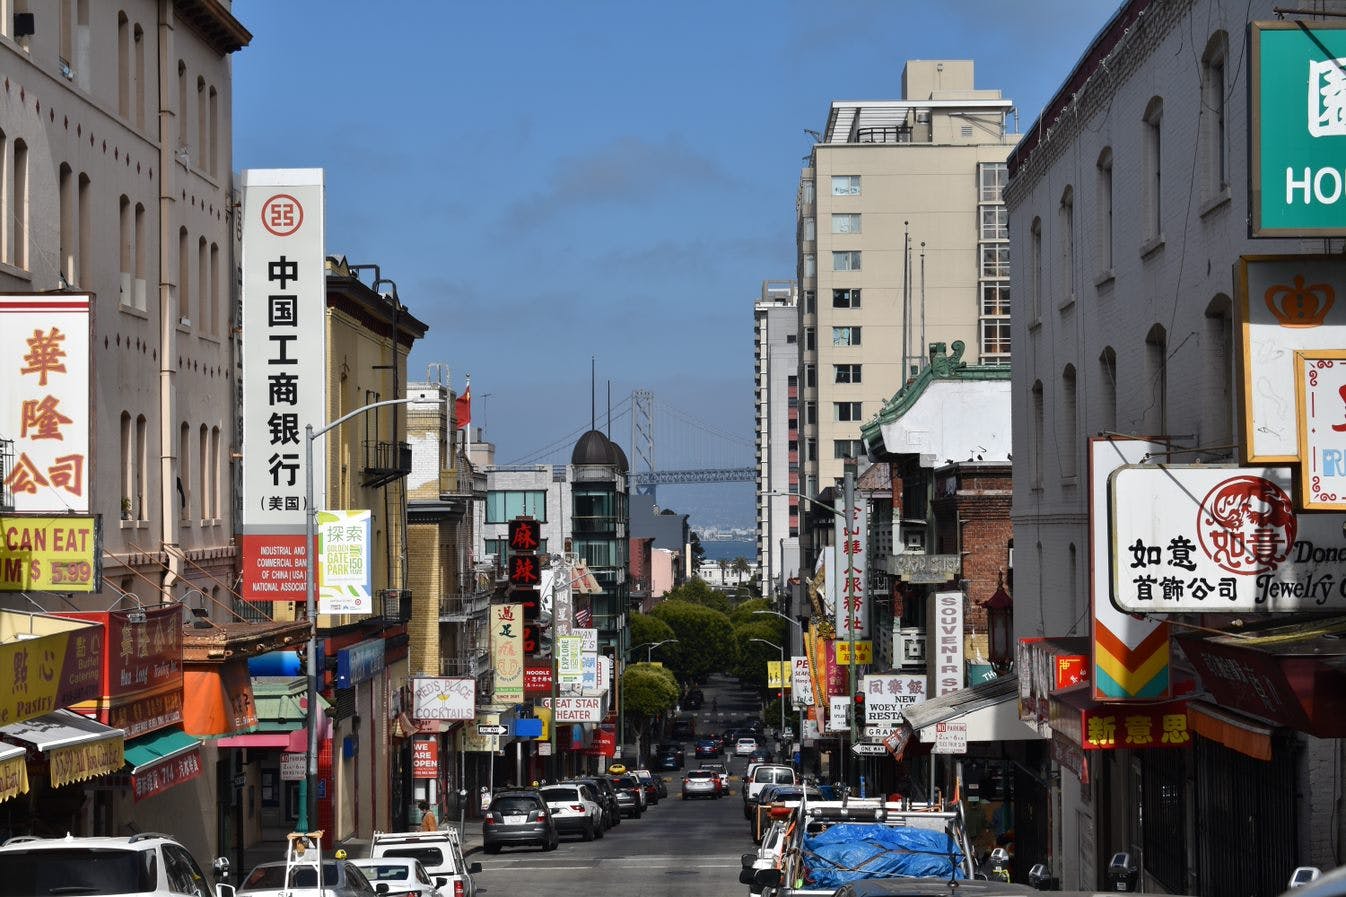 San Francisco Chinatown food and history walking tour Musement